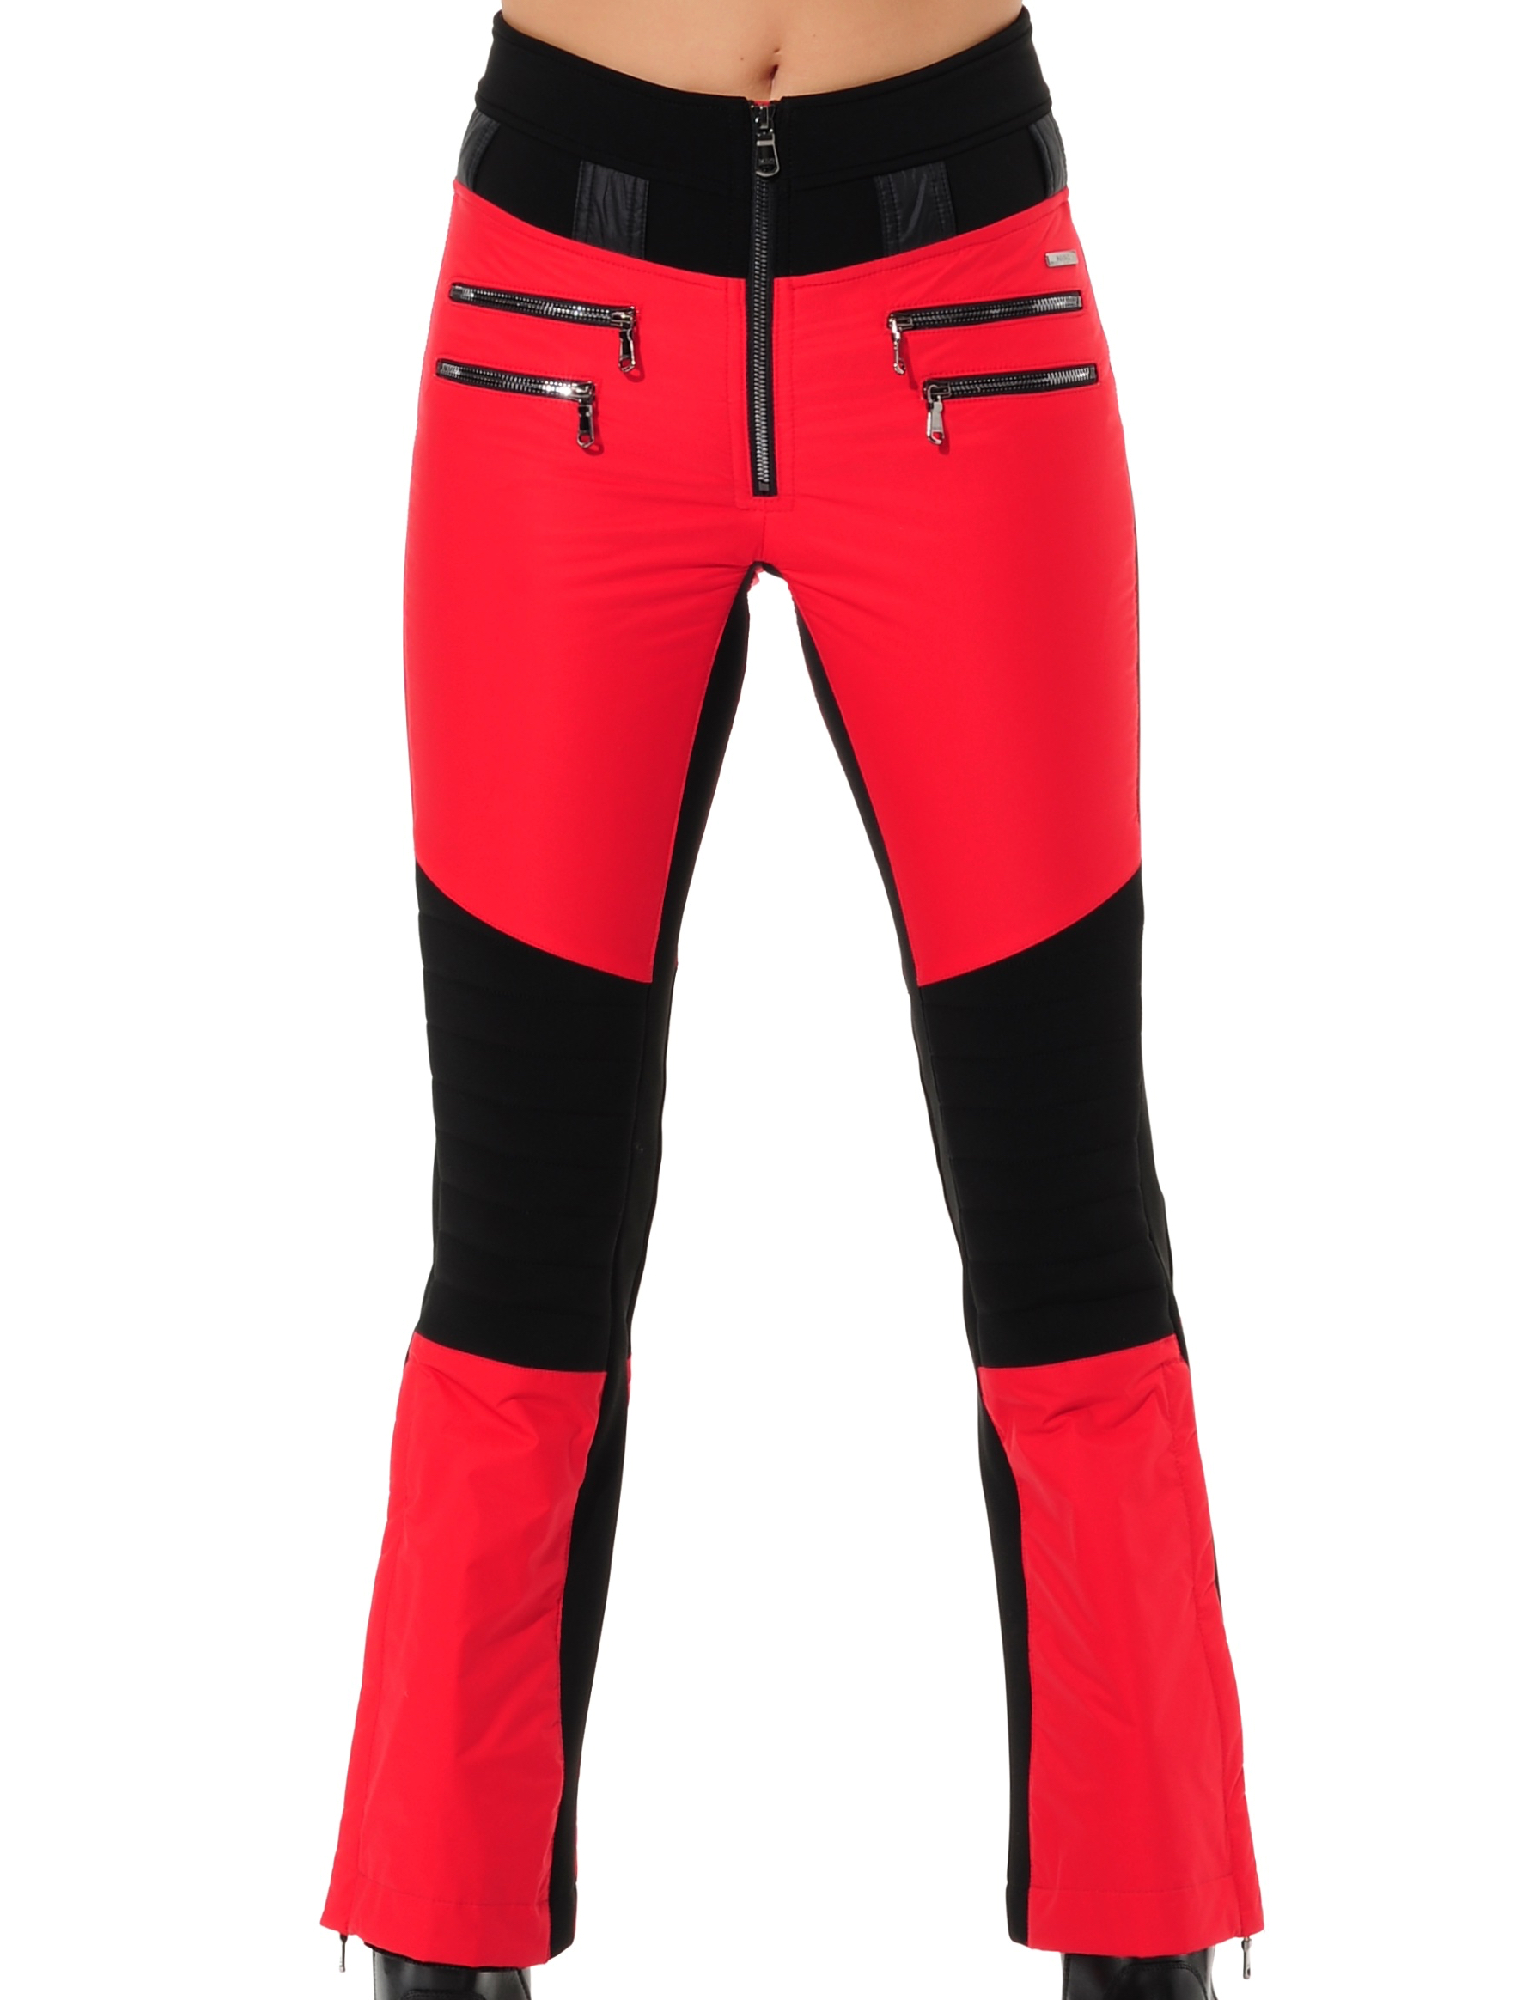 stretch ski pants red/black, 36